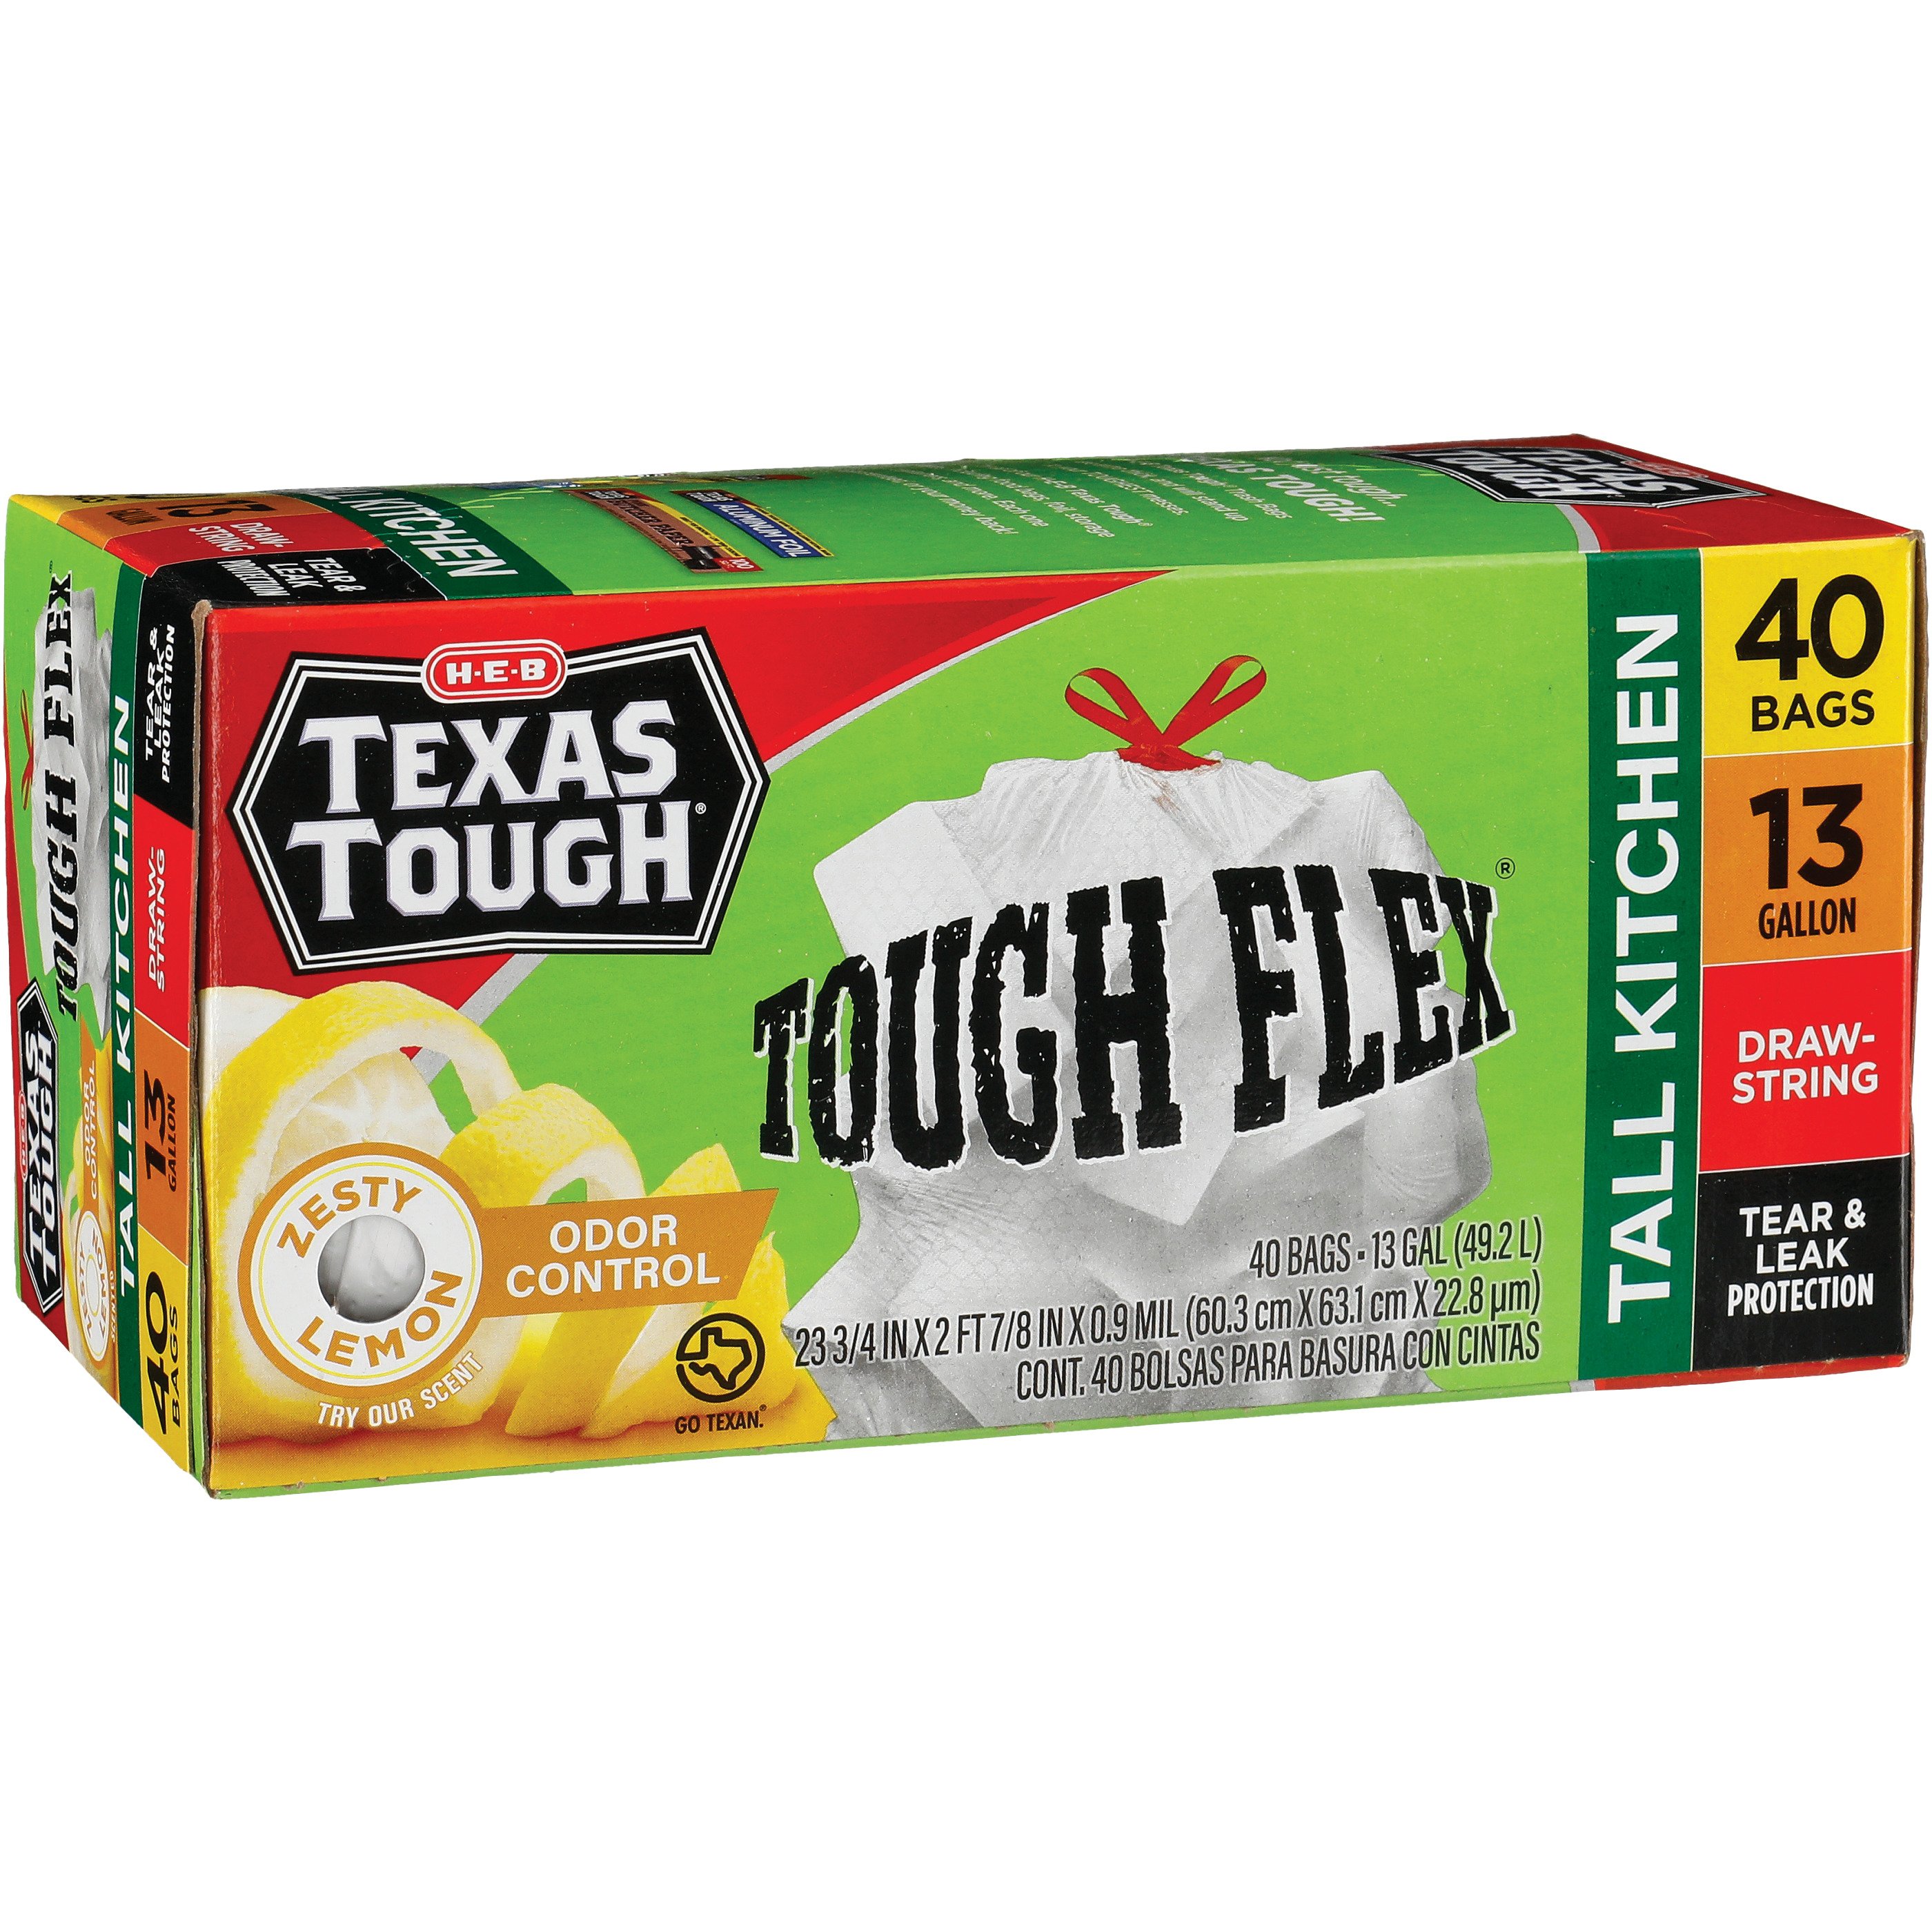 H-E-B Texas Tough Tall Kitchen Flex Trash Bags, 13 Gallon - Lemon Scent